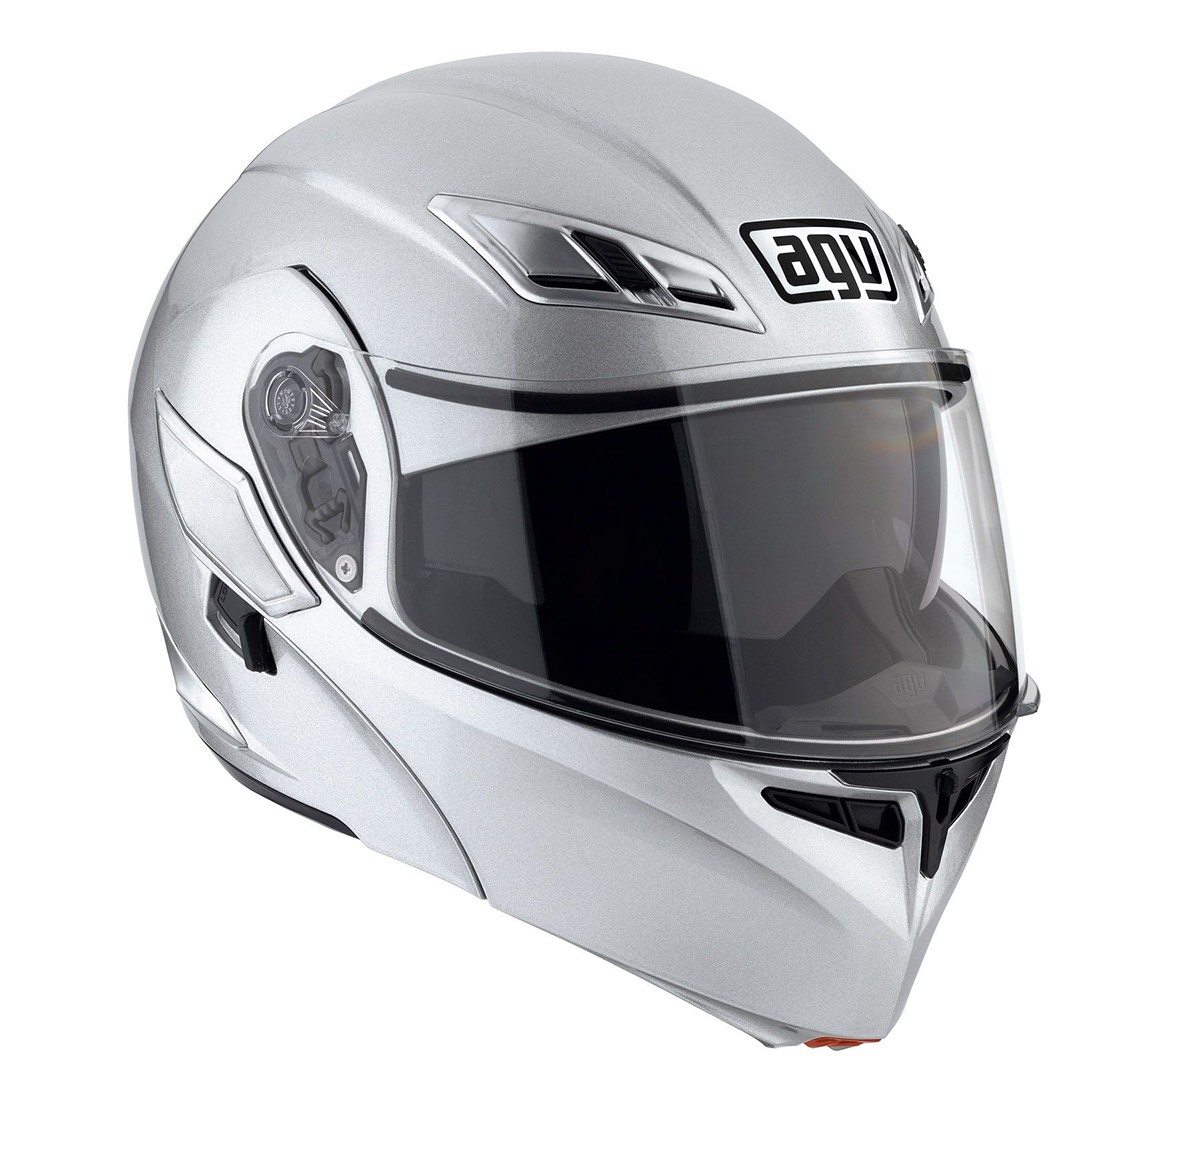 dainese  agv  helmets  bike  motorcycling  racing  motogp  Formula 1  Rally  omp  BMW  catia 